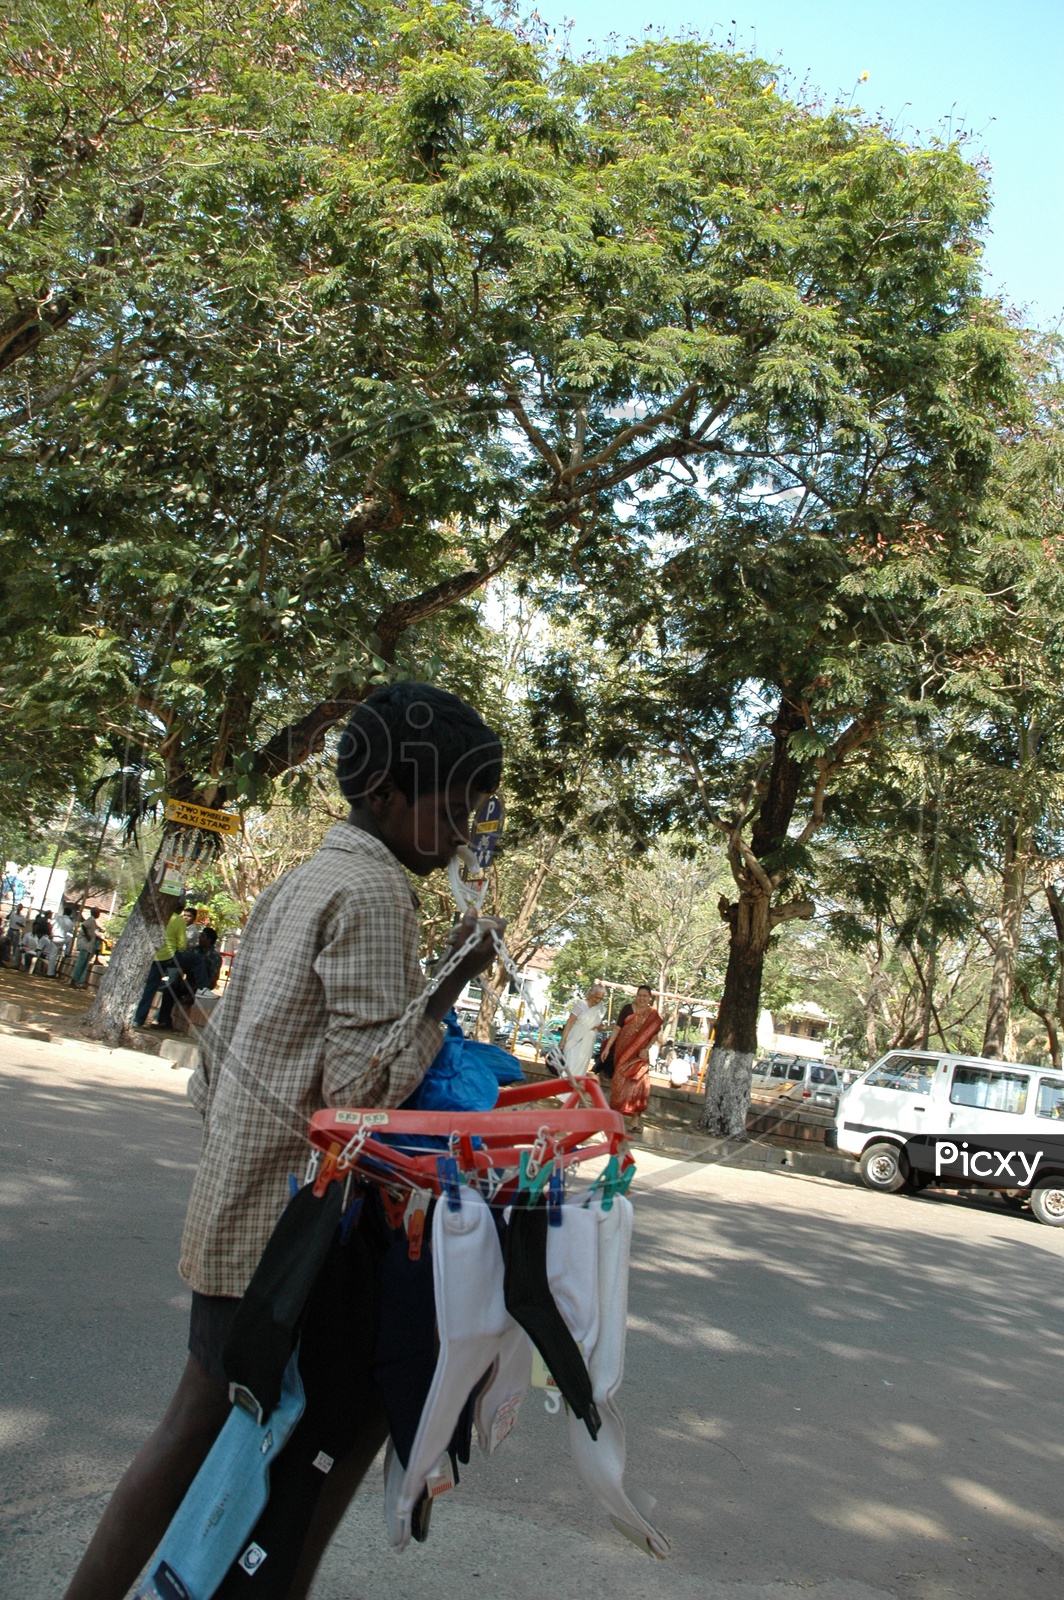 Indian Child Vendor On Indian Roads